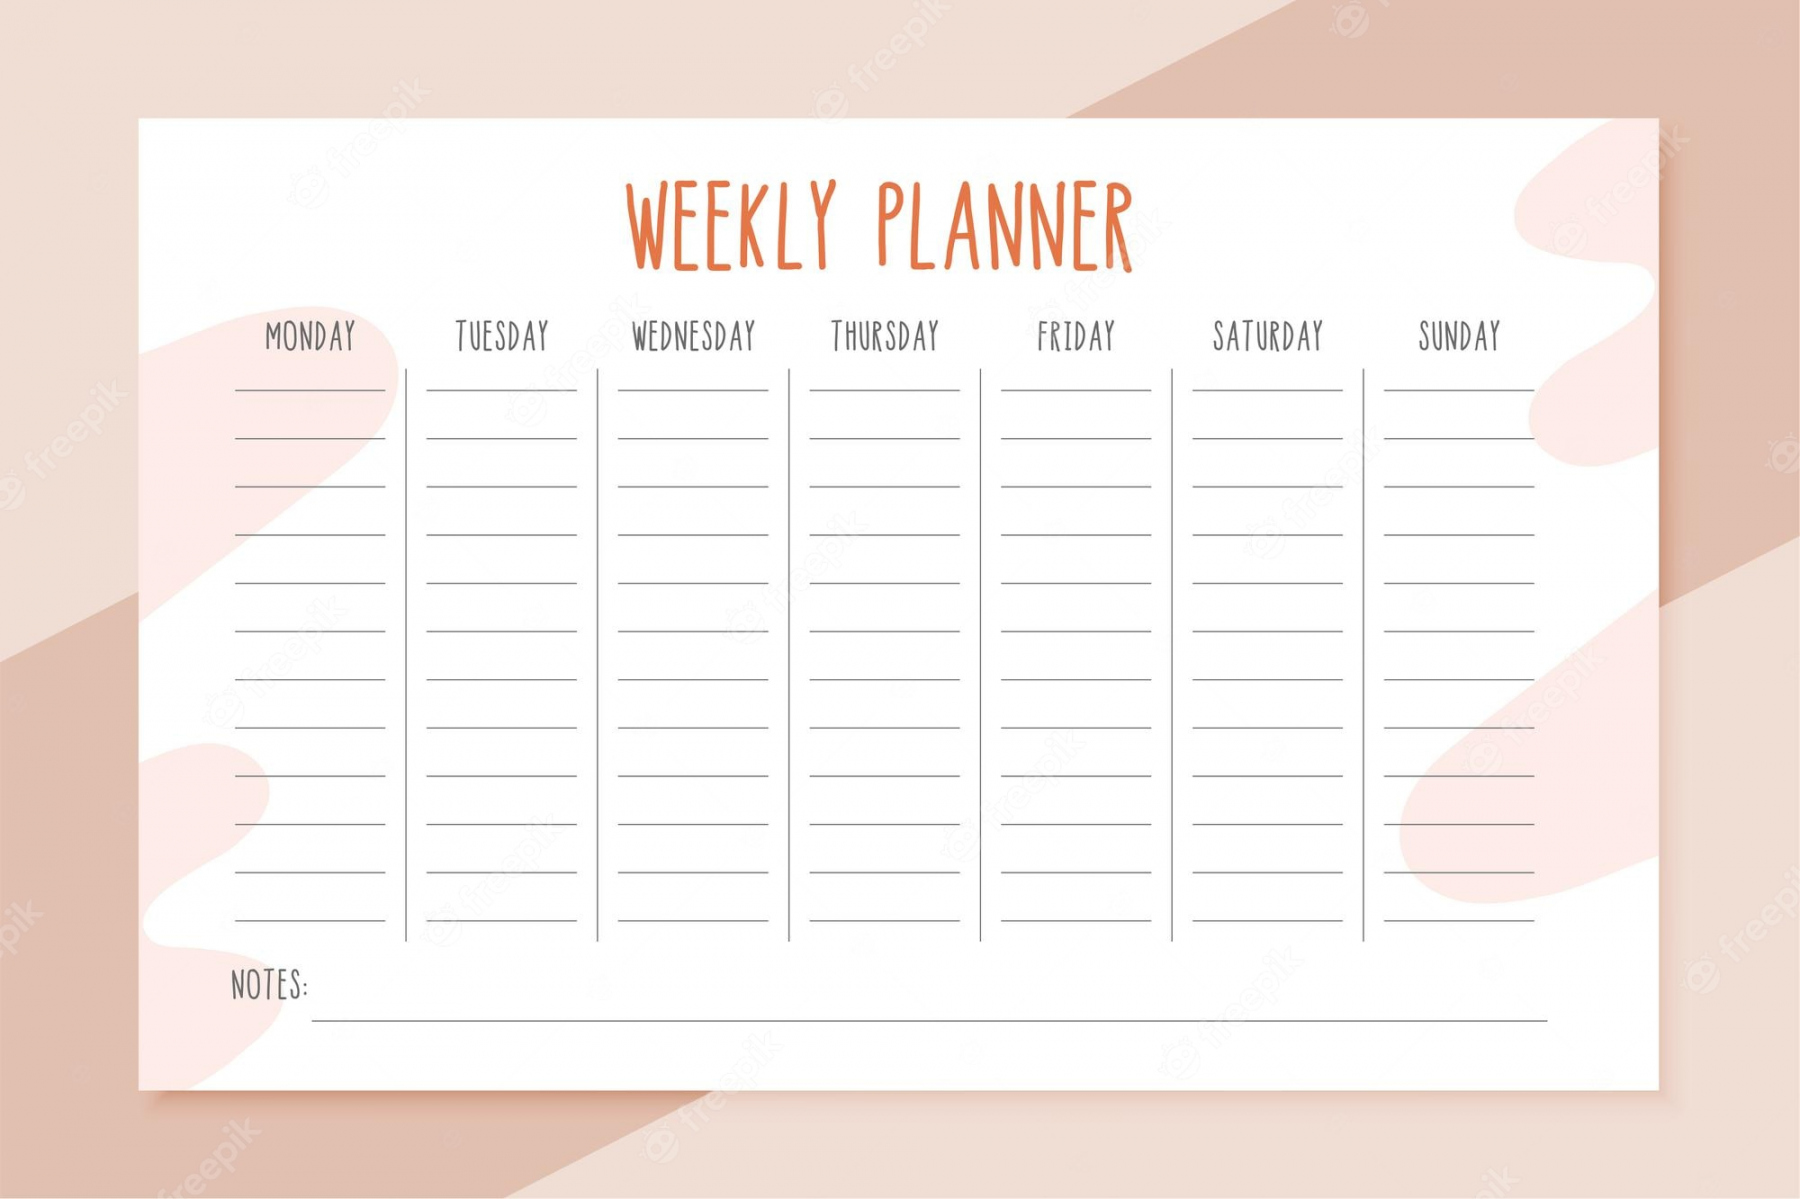 Free Weekly Planner Printable - Printable - Weekly Planner Template - Free Vectors & PSDs to Download